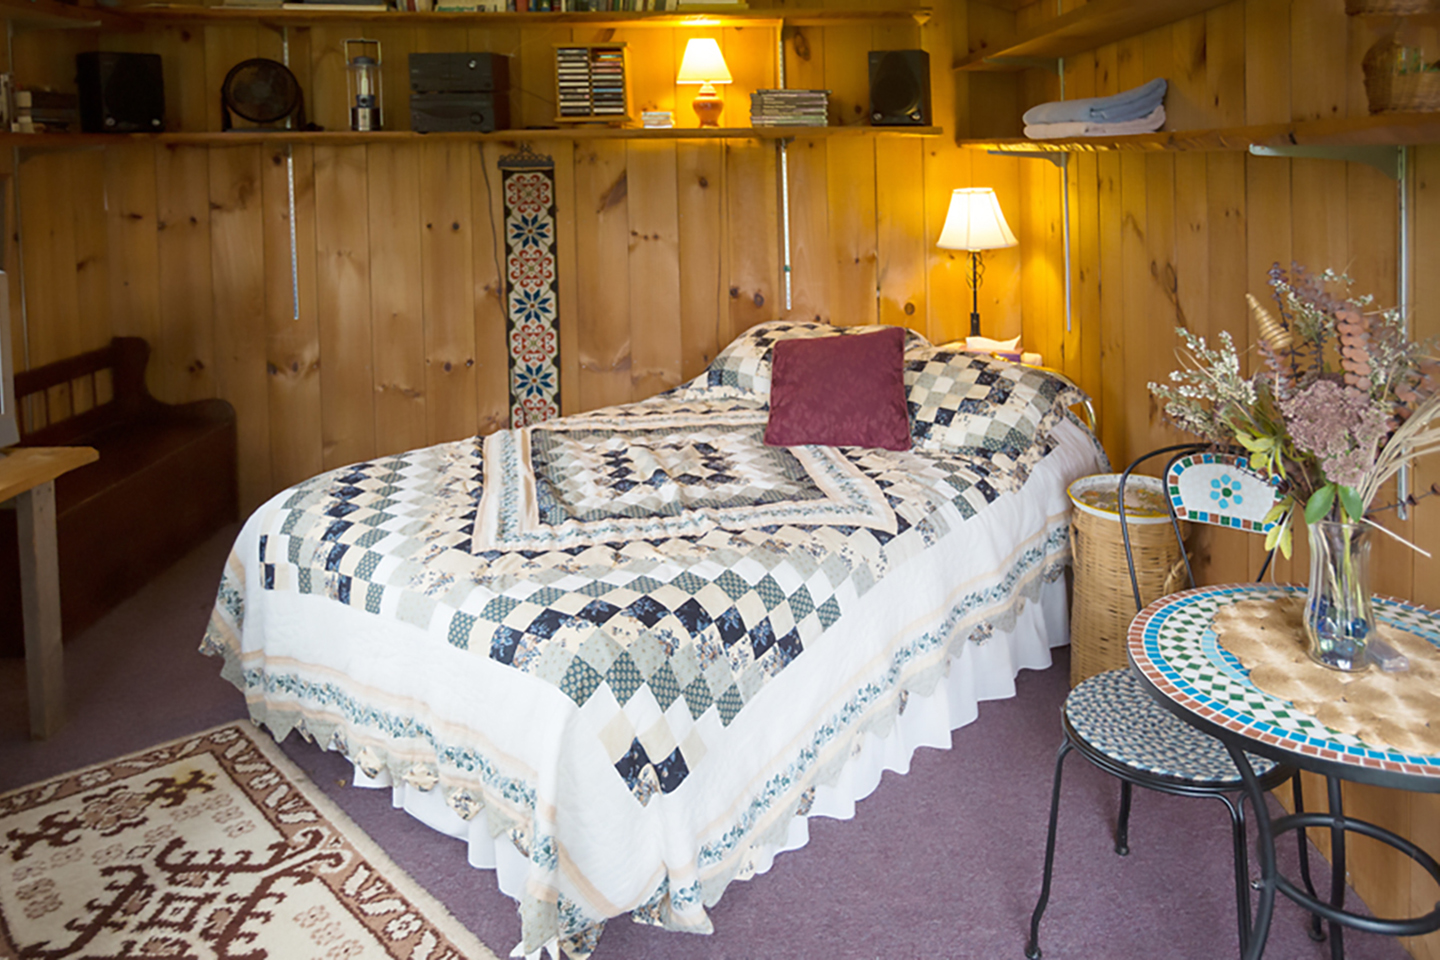 Inside the Rustic Cabin